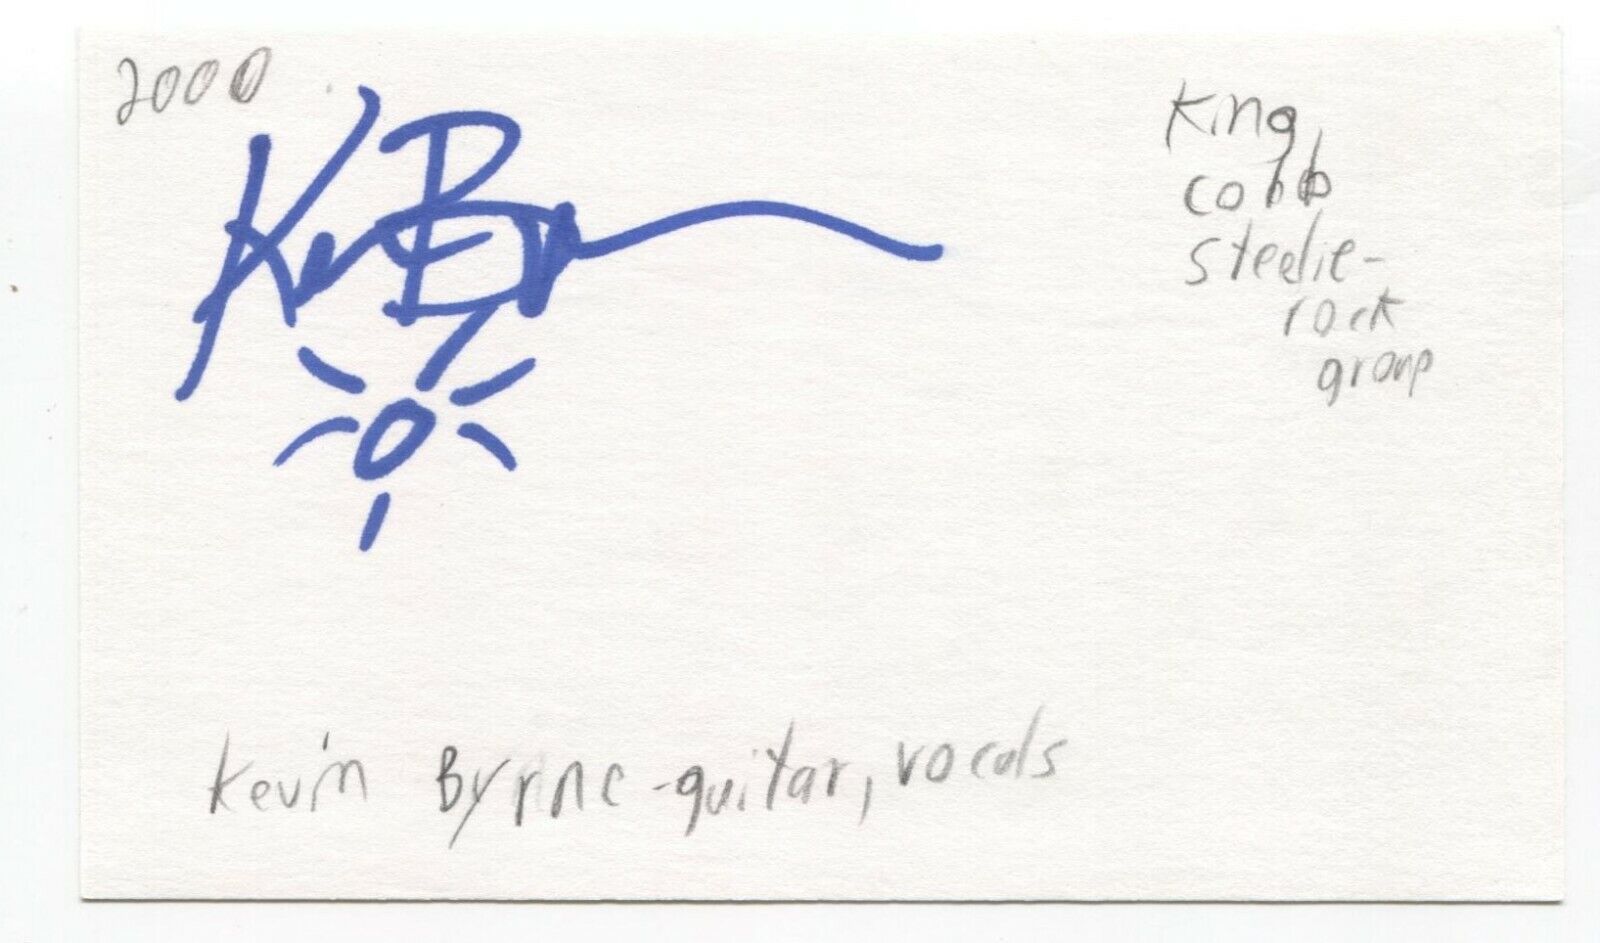 Bargain King Cobb Steelie - Max 46% OFF Kevan Byrne 3x5 Autographe Card Signed Index